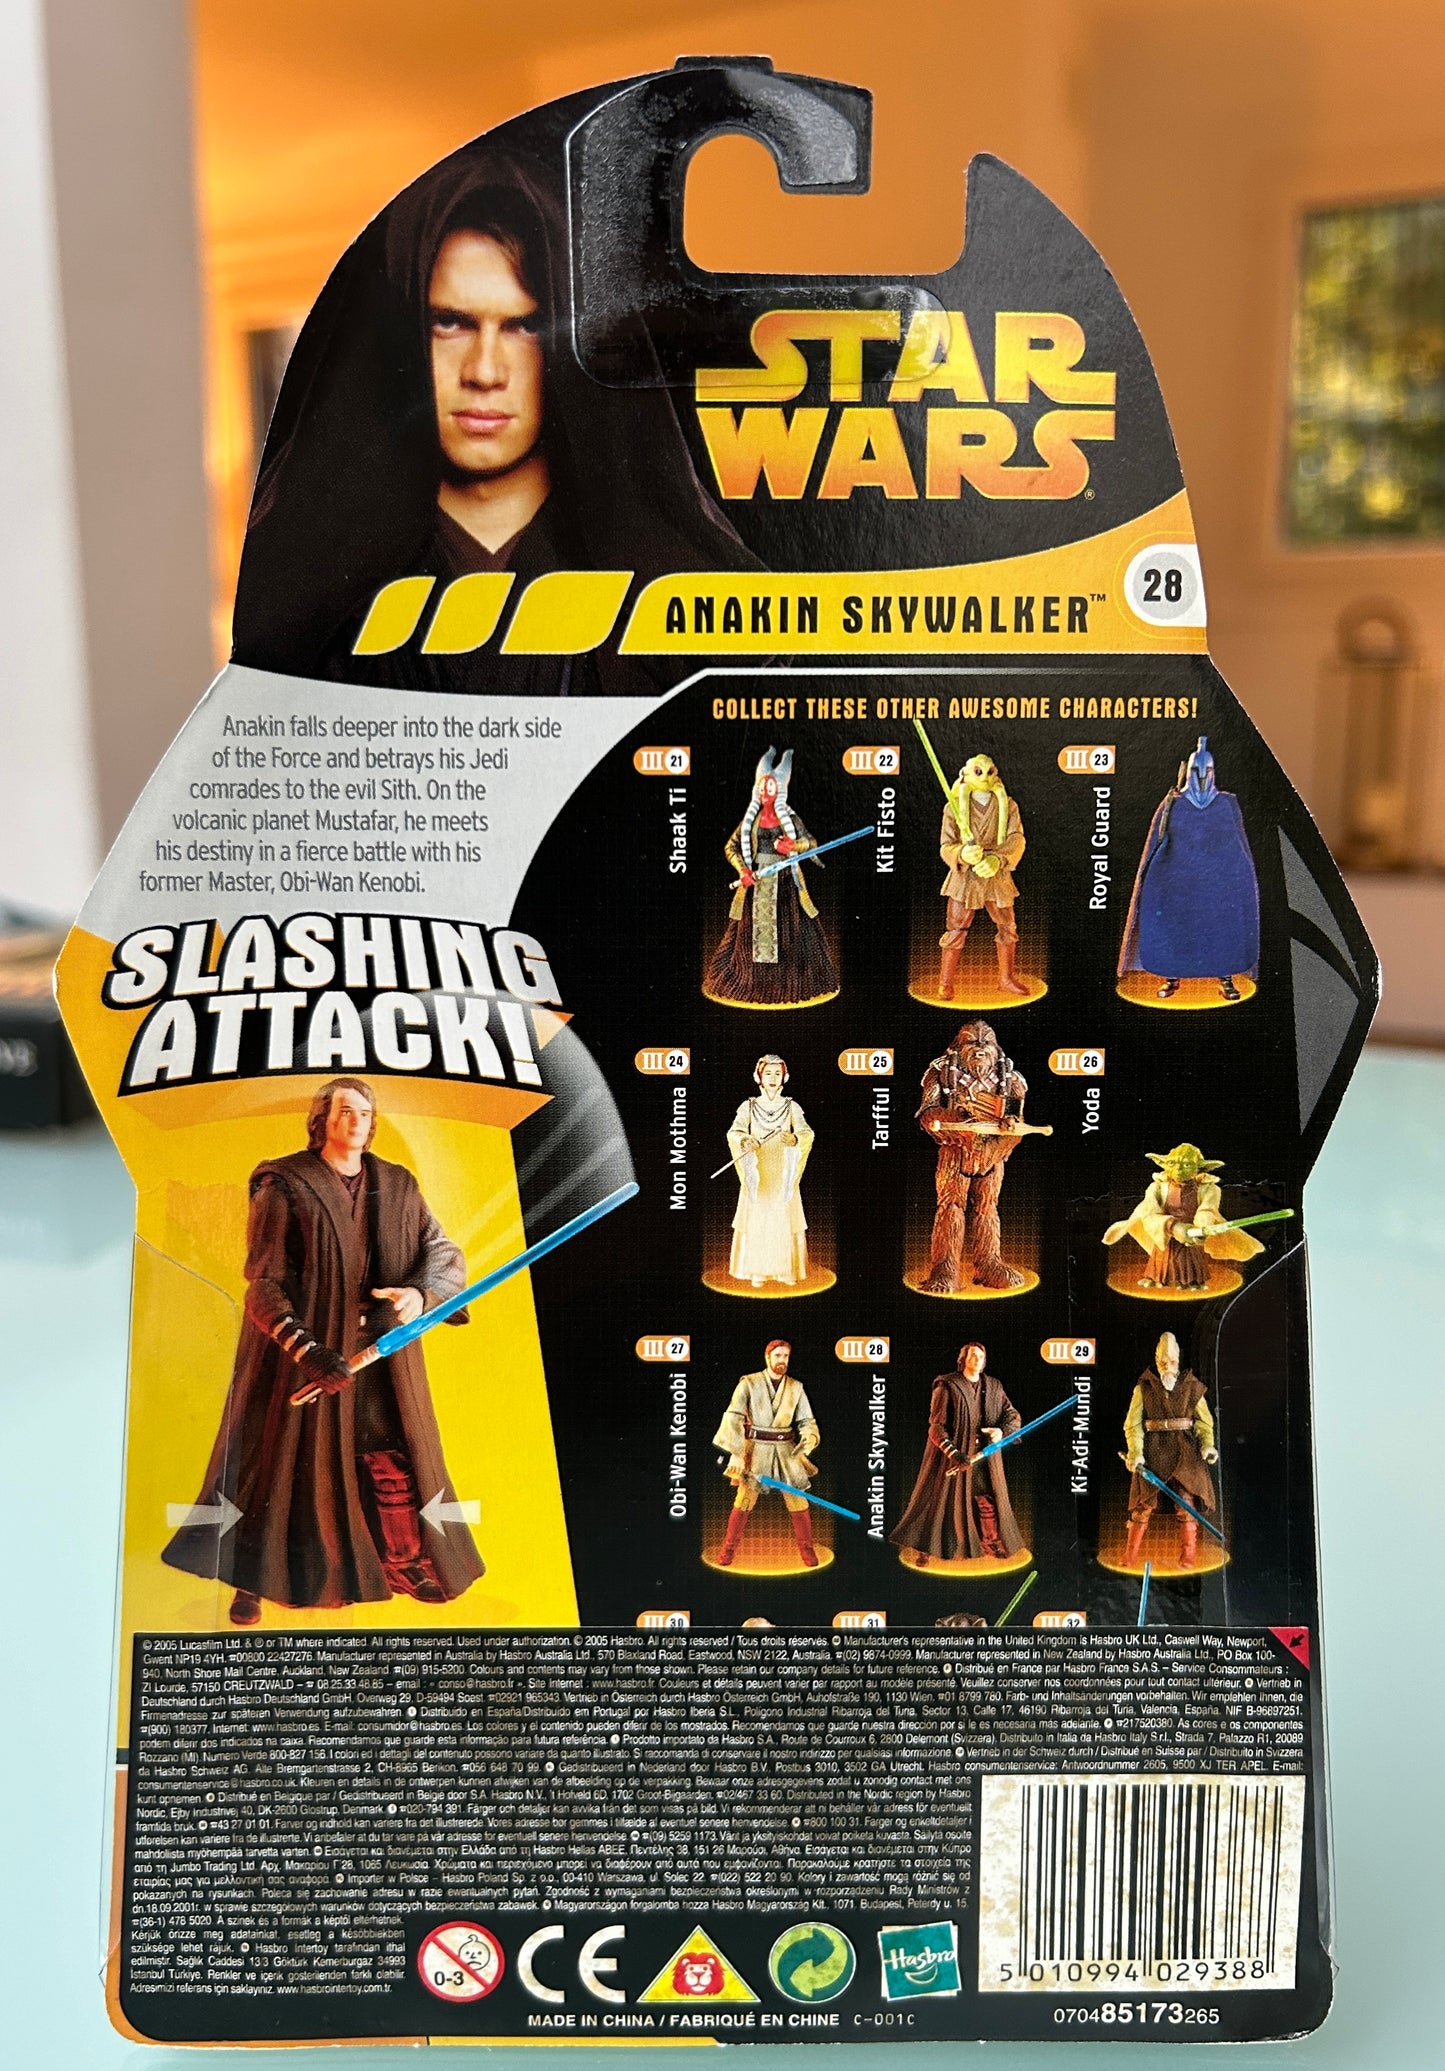 STAR WARS - Revenge of the Sith ROTS - Convention Exclusive Star Wars Réunion Paris 2005 - Figurine Anakin Skywalker